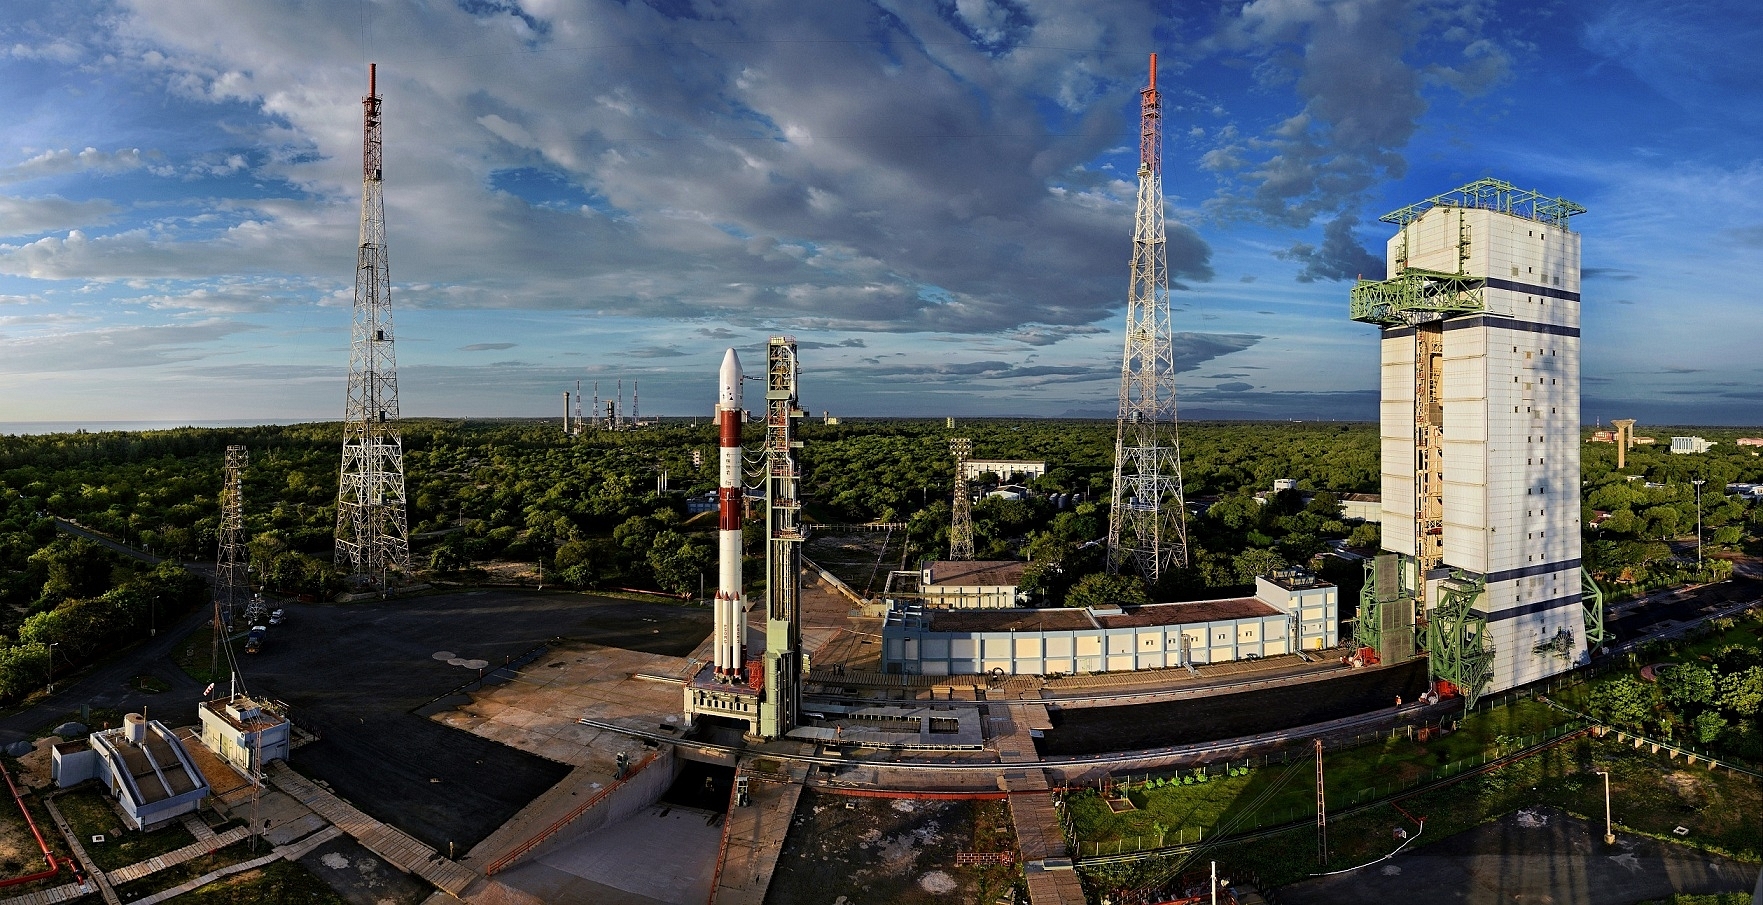 The Sriharikota launch pad. Photo credit: ISRO